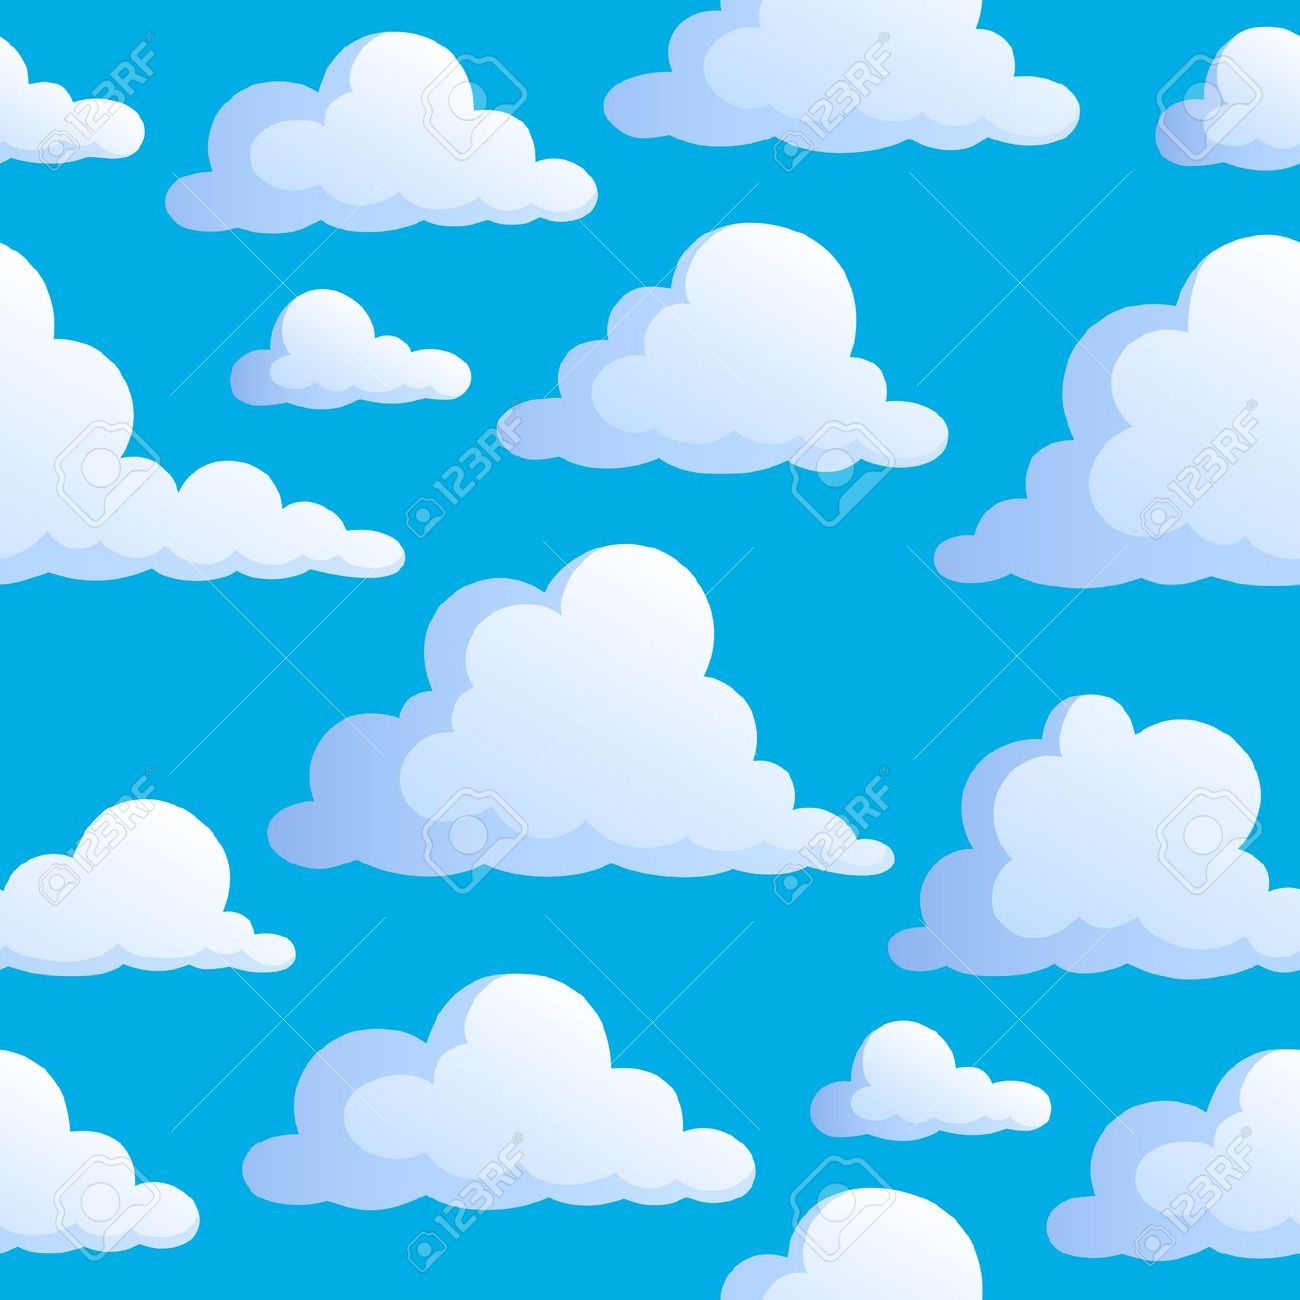 cloud clipart background - photo #29